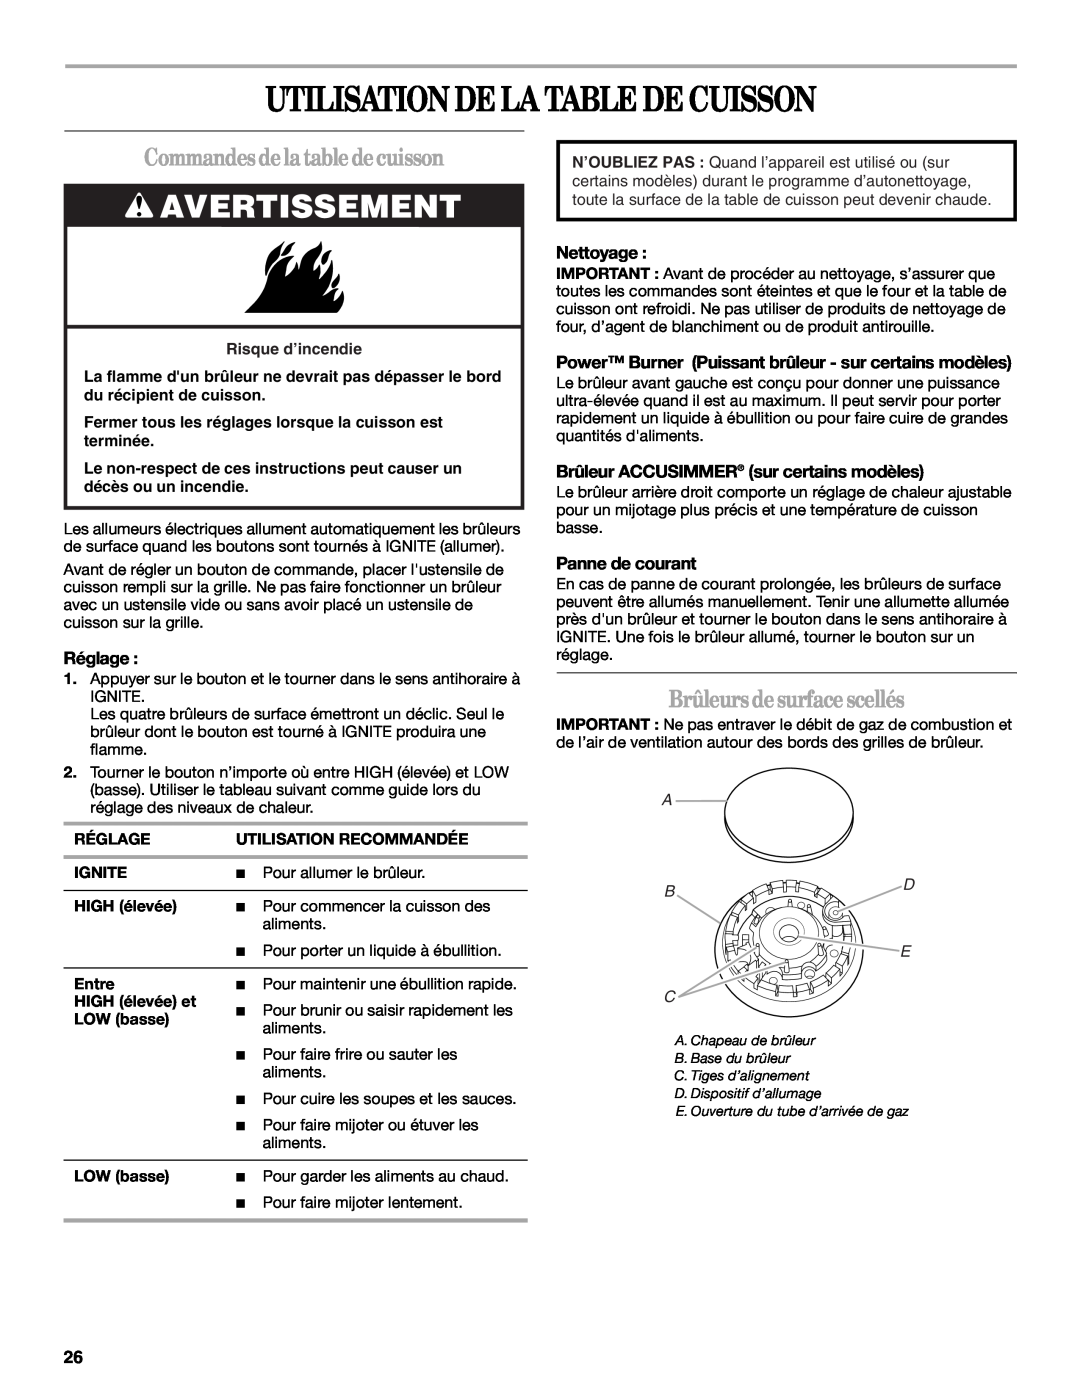 Whirlpool 9761040 manual Utilisation De La Table De Cuisson, Commandes de la table de cuisson, Brûleurs de surface scellés 